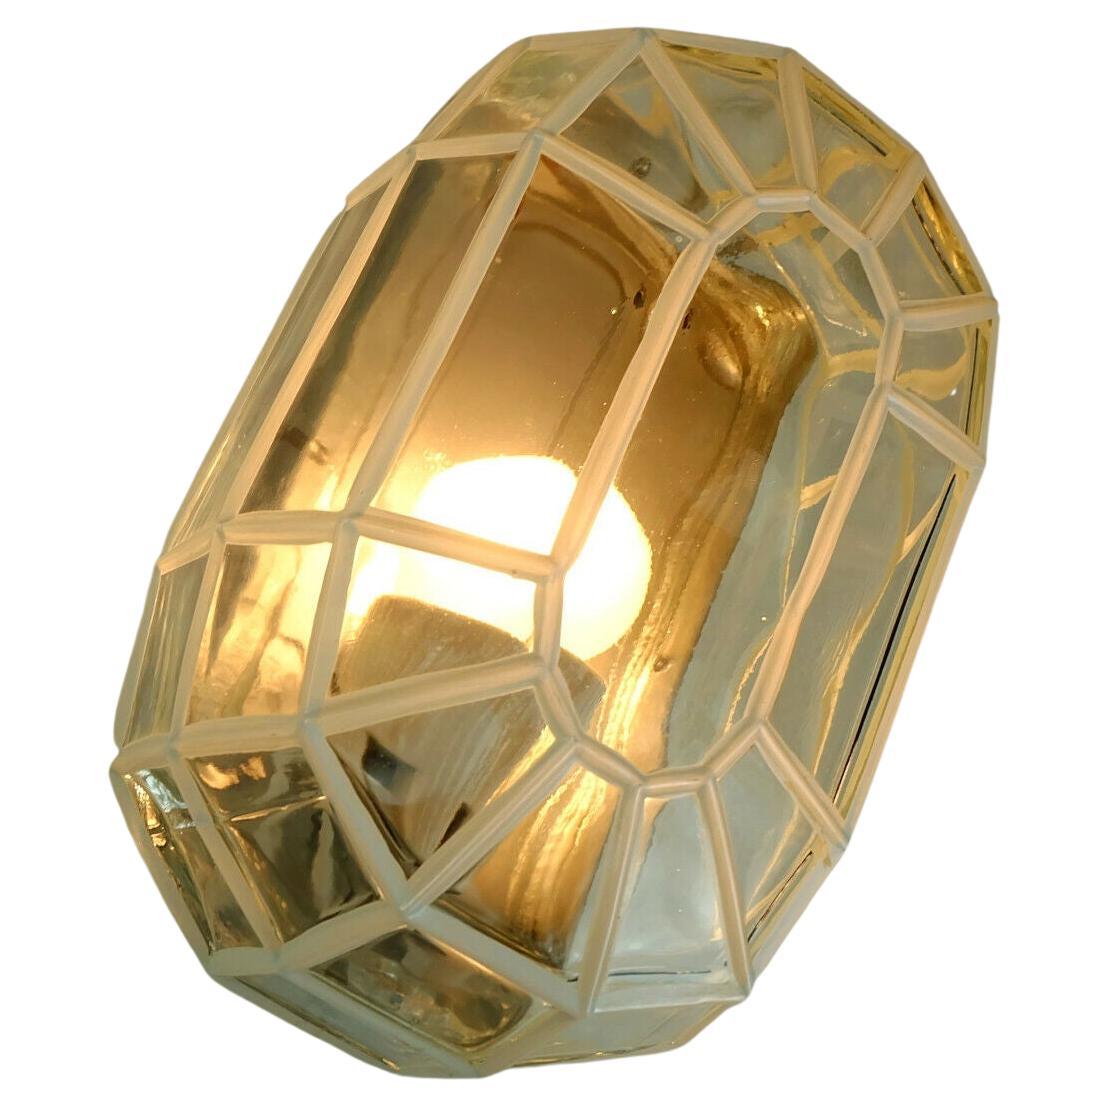 1960s Midcentury Sconce Clear Glass Geometric Design Heinrich Popp Leuchten For Sale